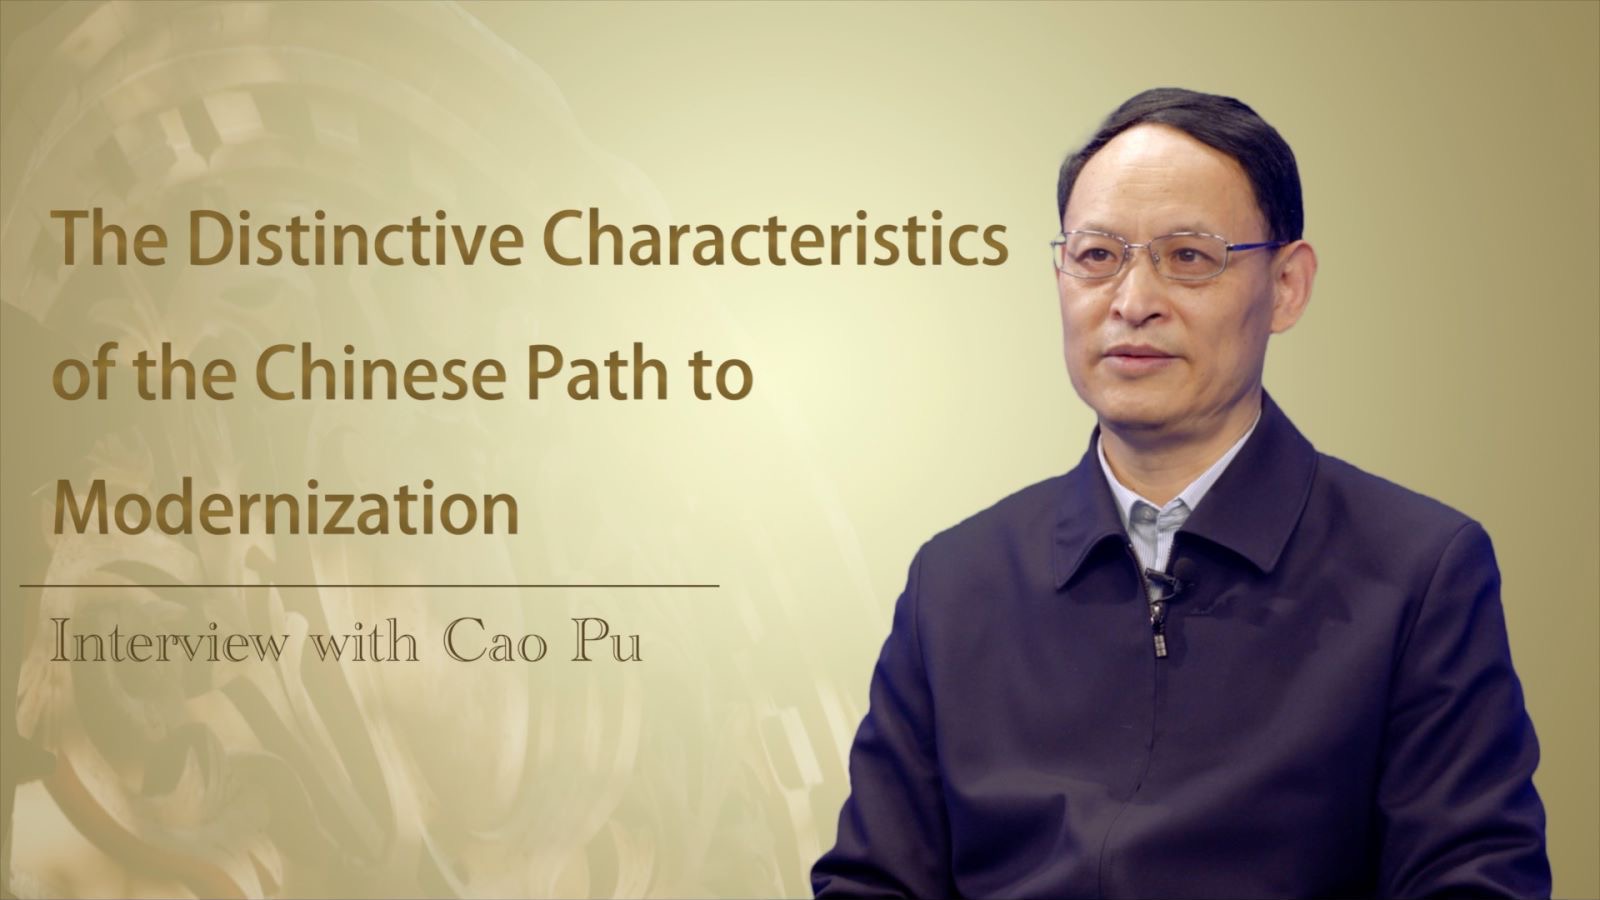 The Distinctive Characteristics of the Chinese Path to Modernization